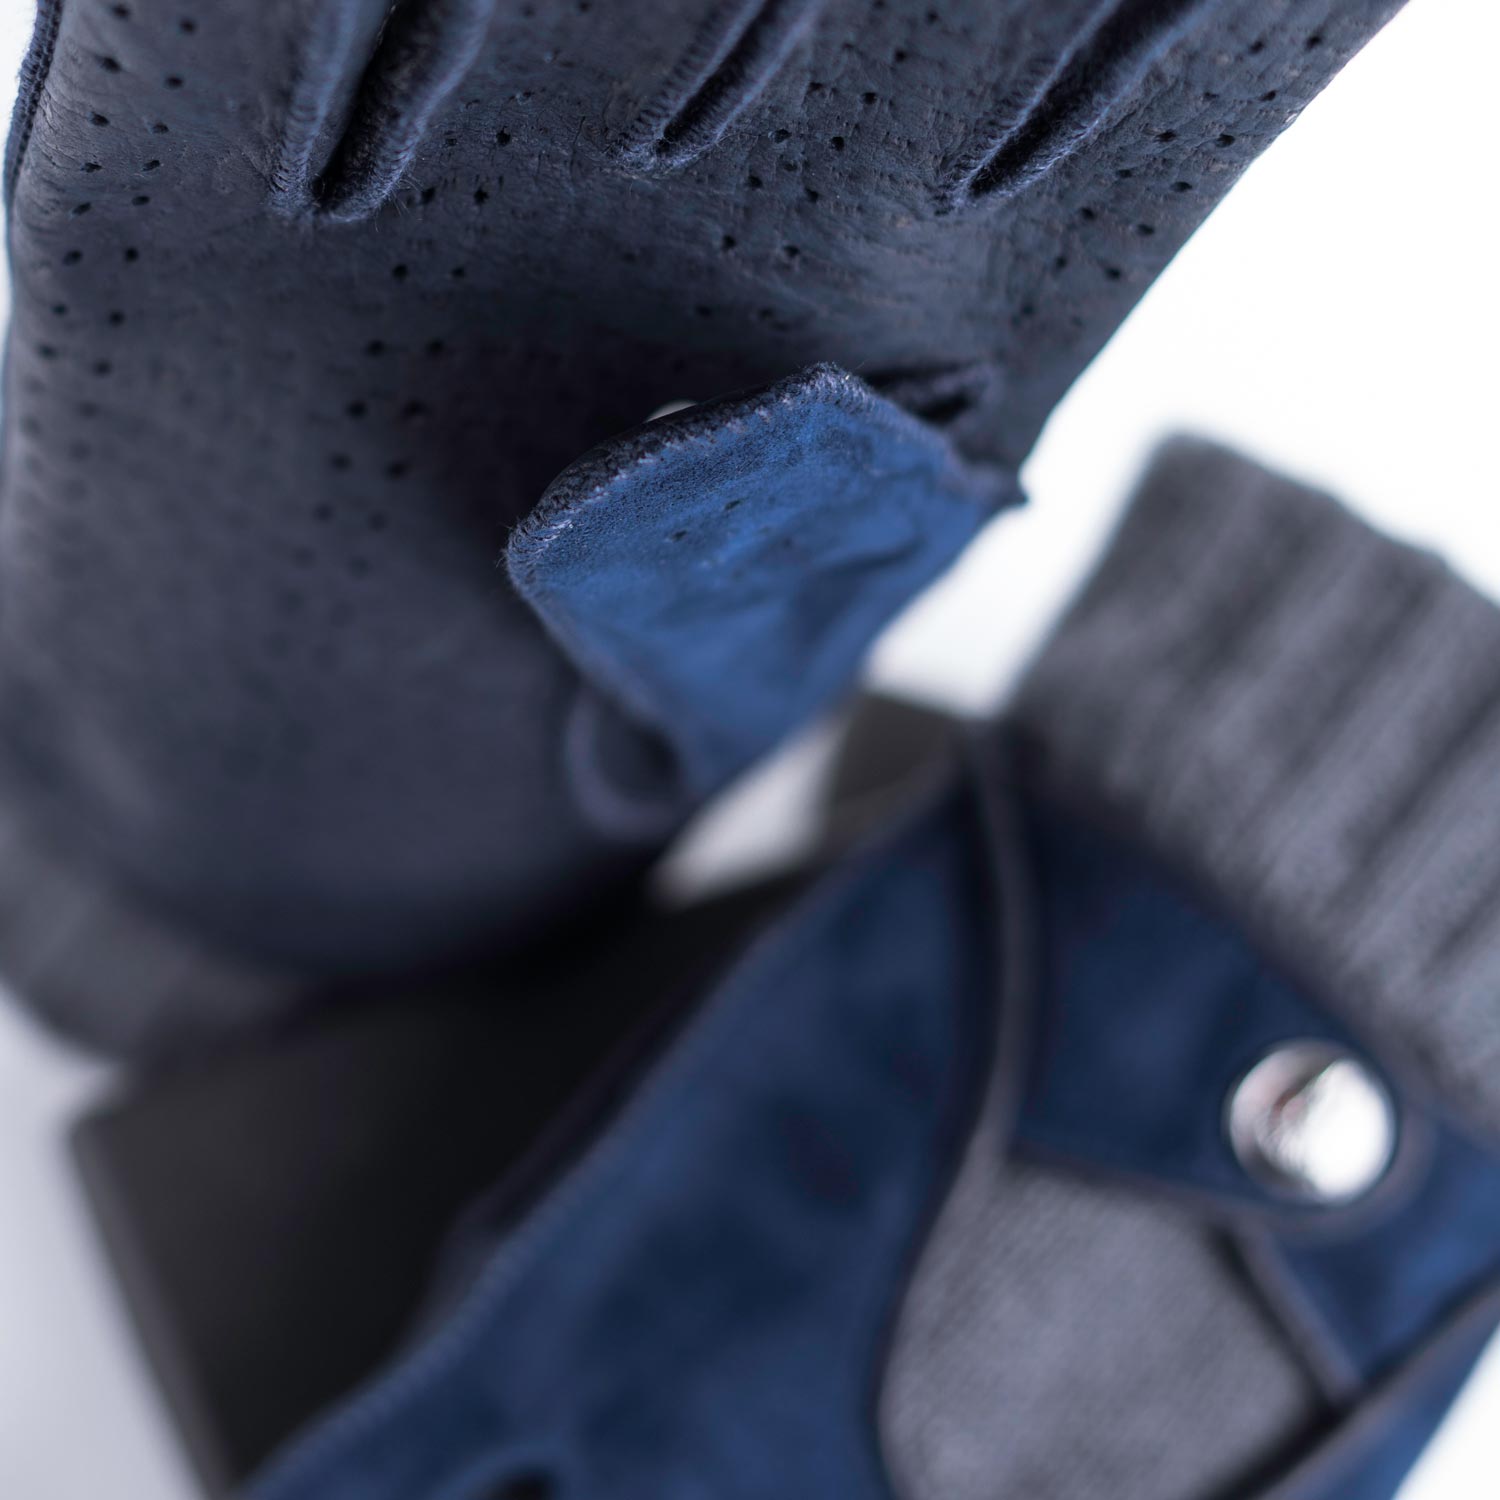 BlueCruiser Winter Driving Gloves - Opinari - Driver's Essentials